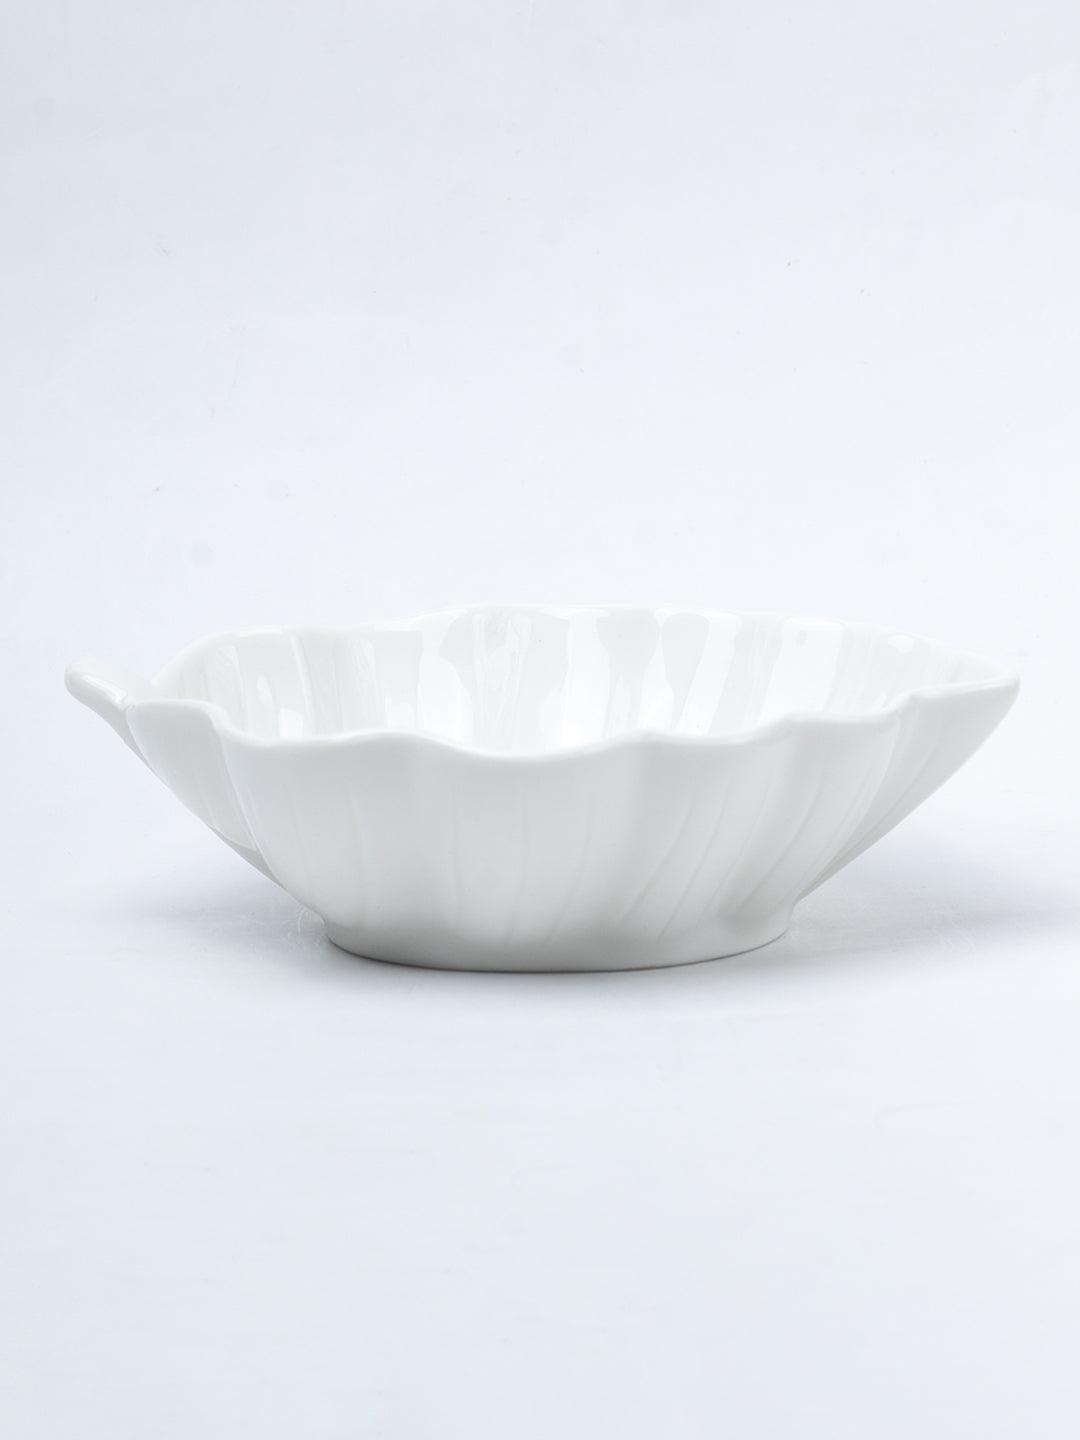 Off White Ceramic Rectangle Dish - Pack Of 3, Plain - 5